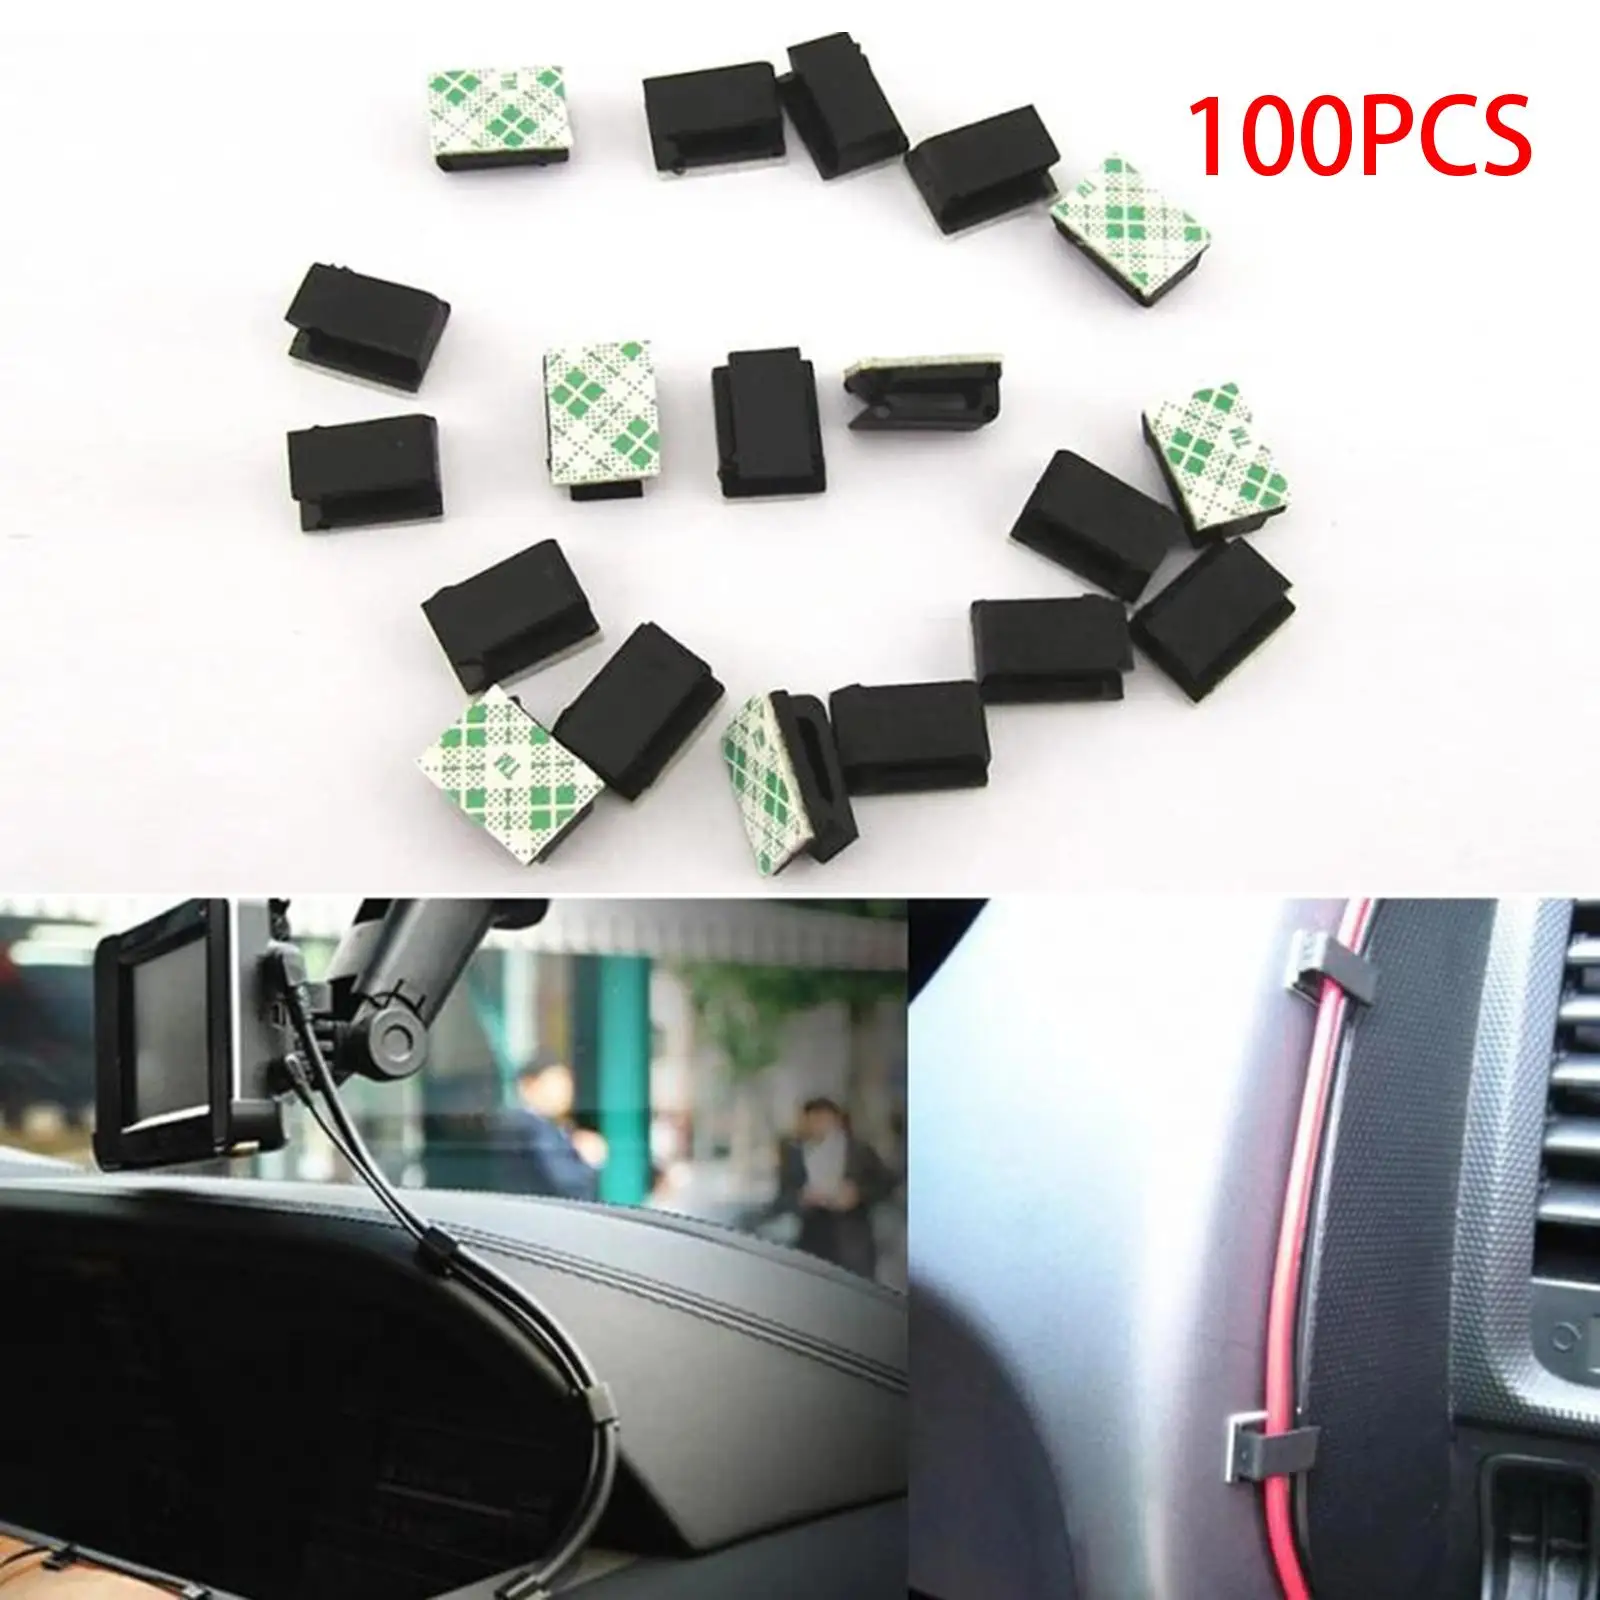 100 Pieces Self Adhesive Cable Clips Clip Durable Portable Tools Bundler Home Under Desk Car Kitchen Dresser